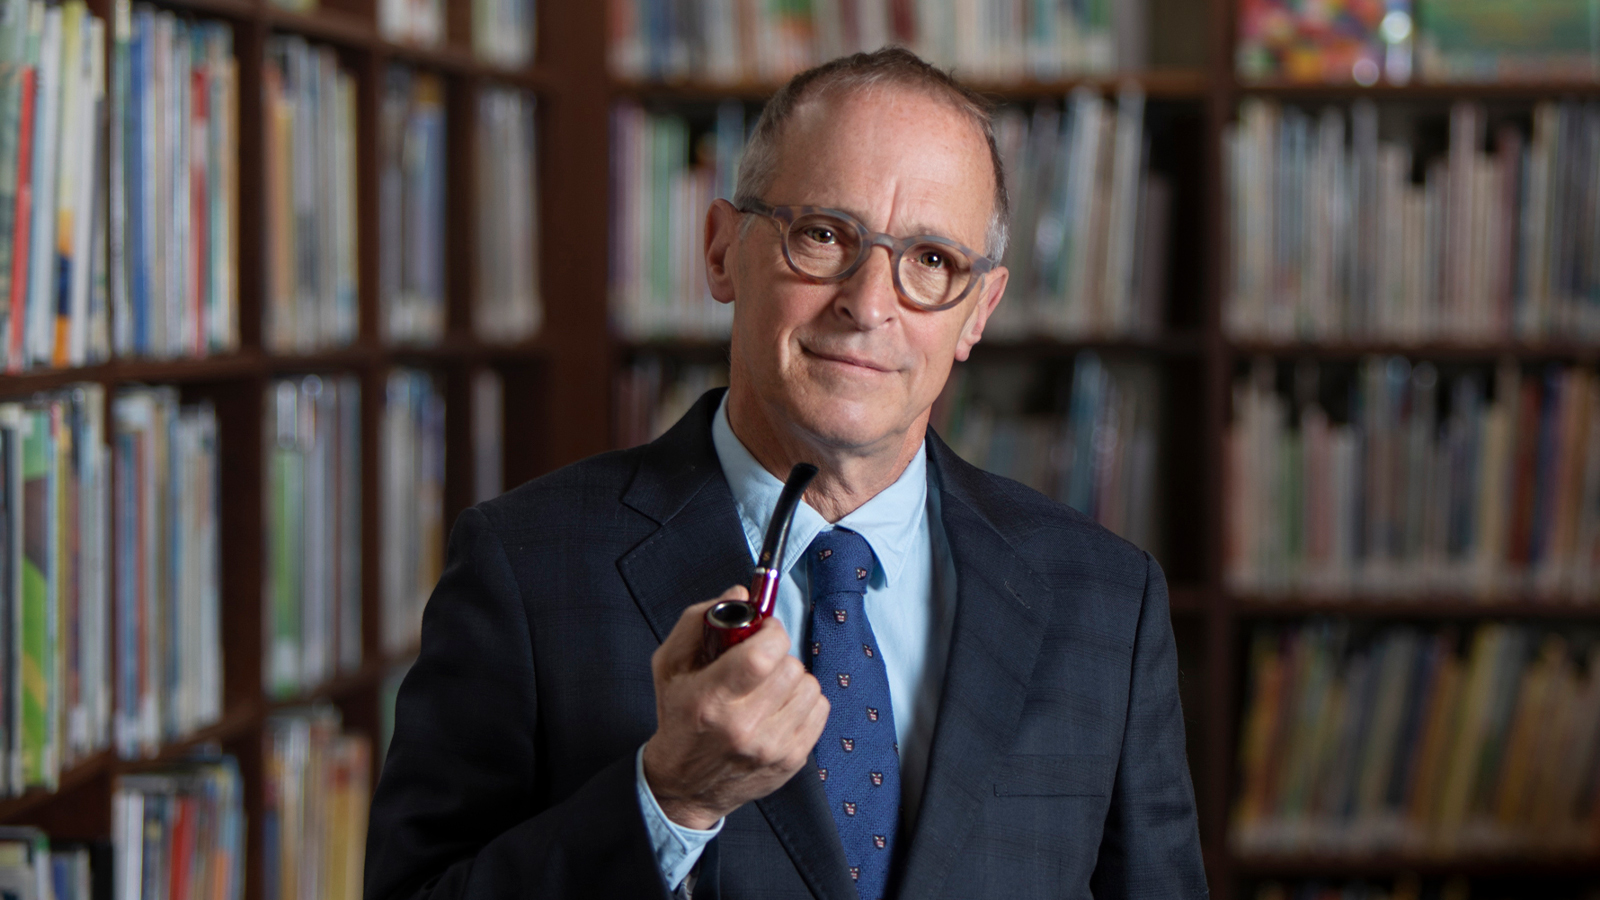 David Sedaris an American humorist in a suit holding a cigar pipe.